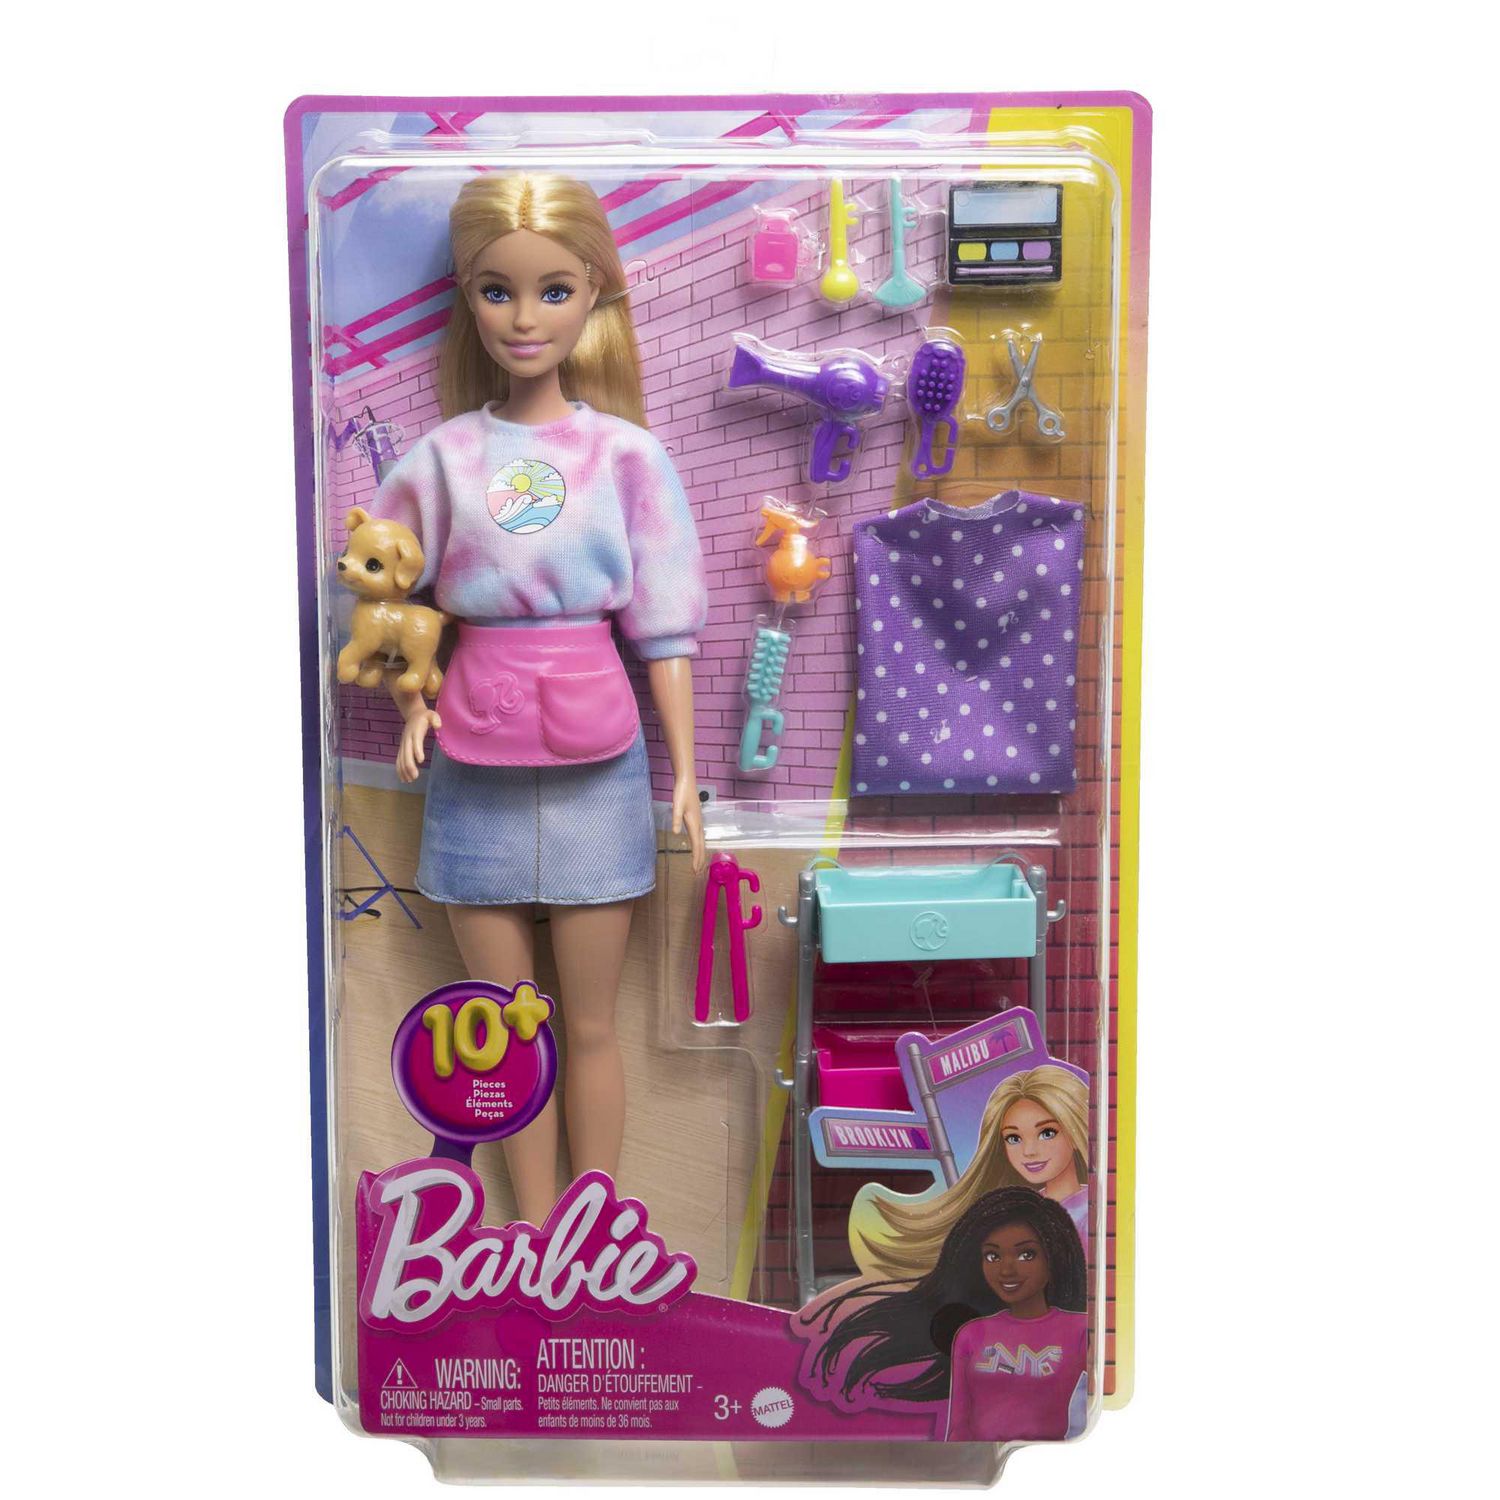 Barbie “Malibu” Stylist Doll & 14 Accessories Playset, Hair